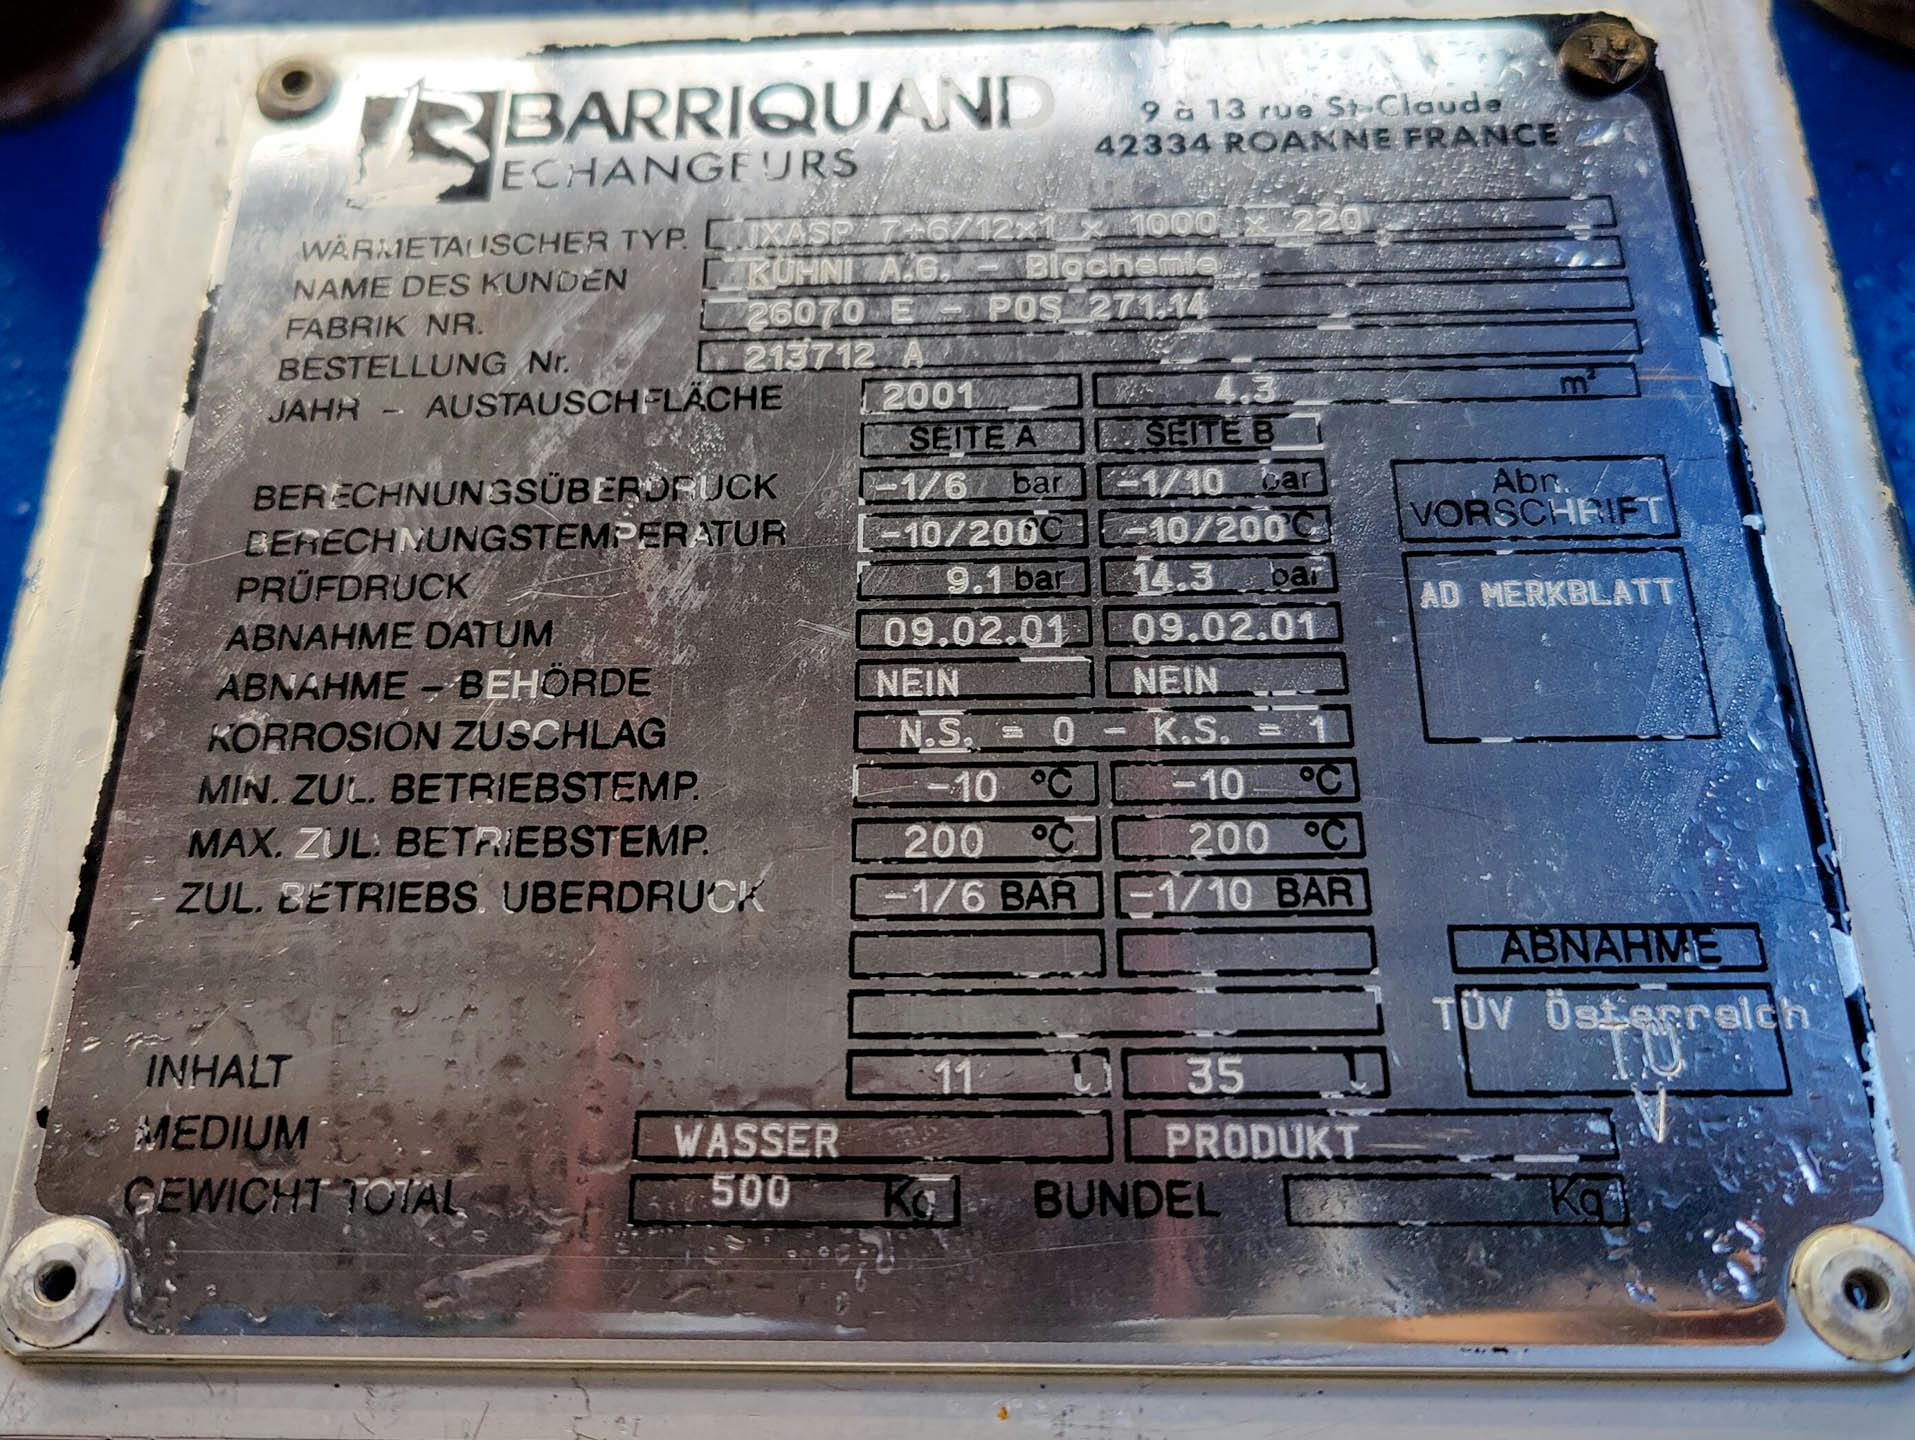 Barriquand IXASP716/12x1x1000x220 - Intercambiador de calor de placas - image 7